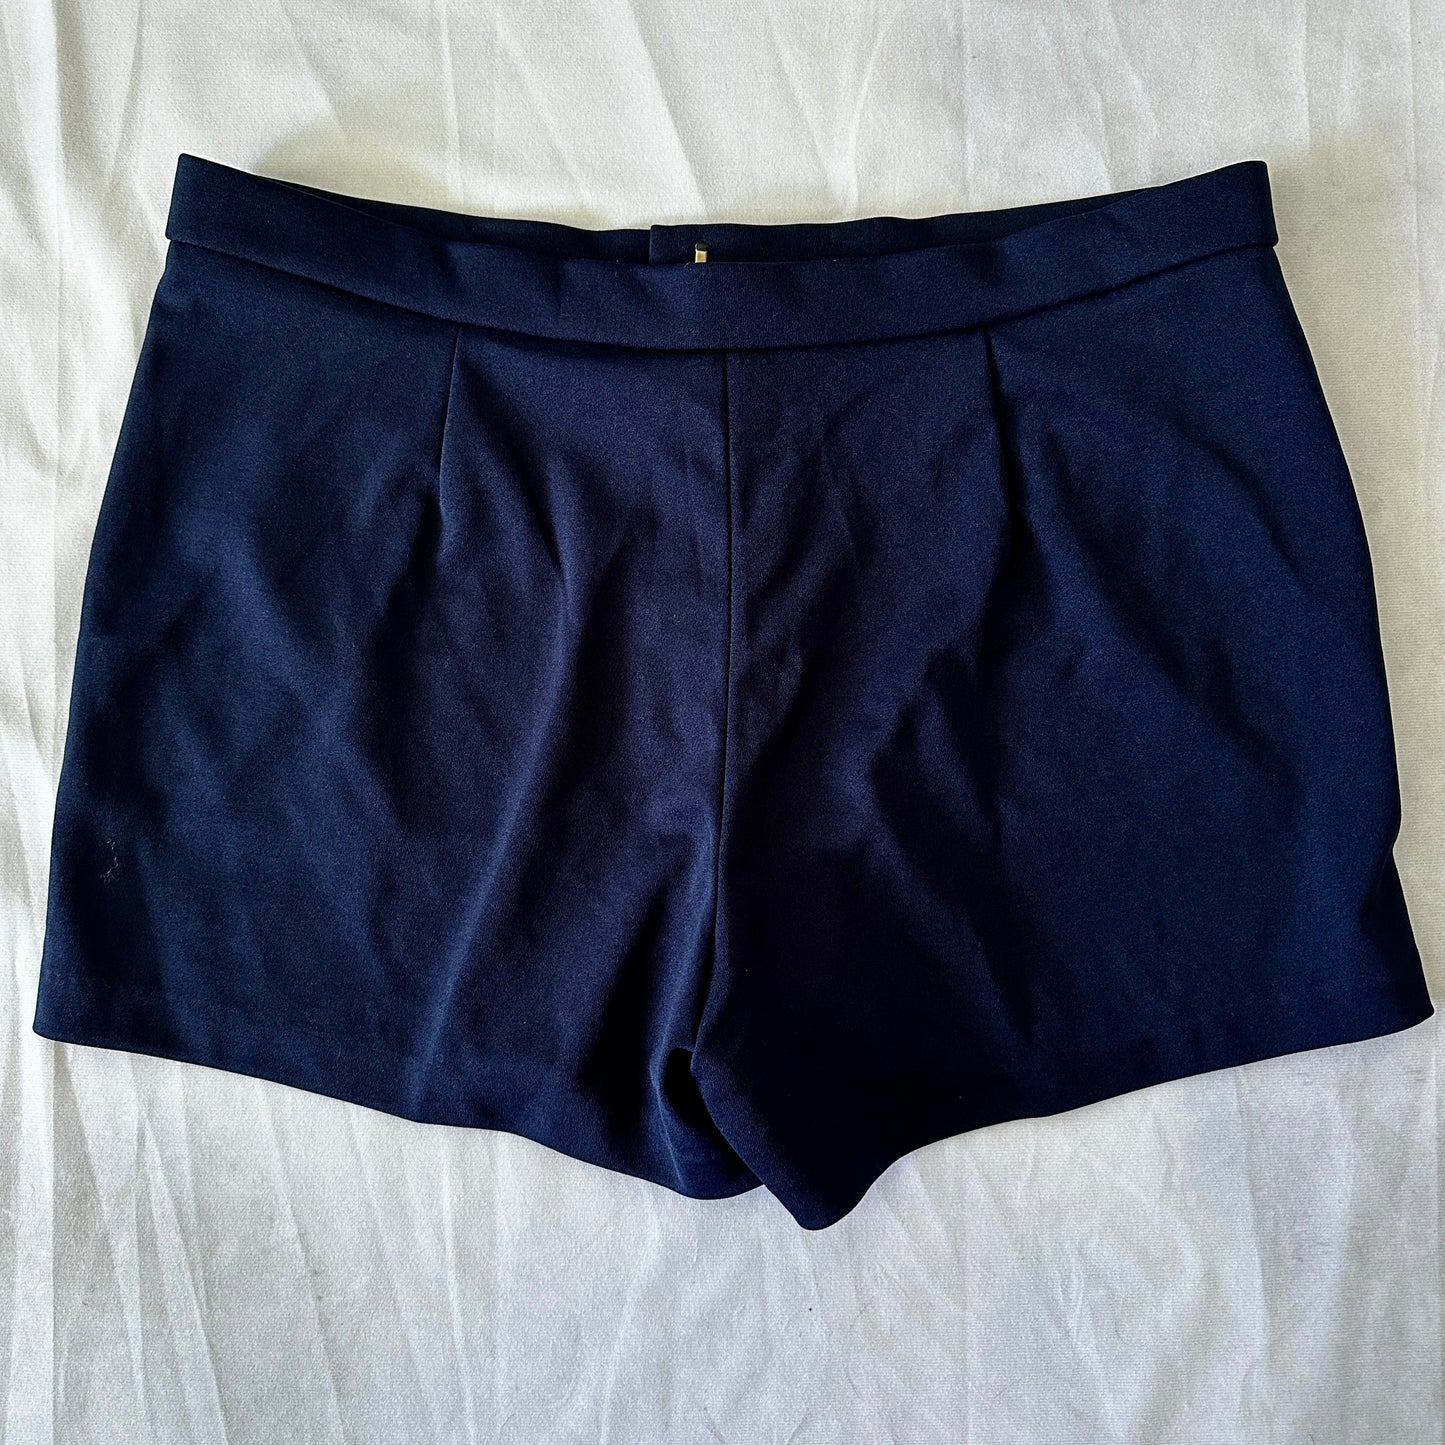 Adidas 80s Vintage Tennis Shorts - Navy - 52 / L